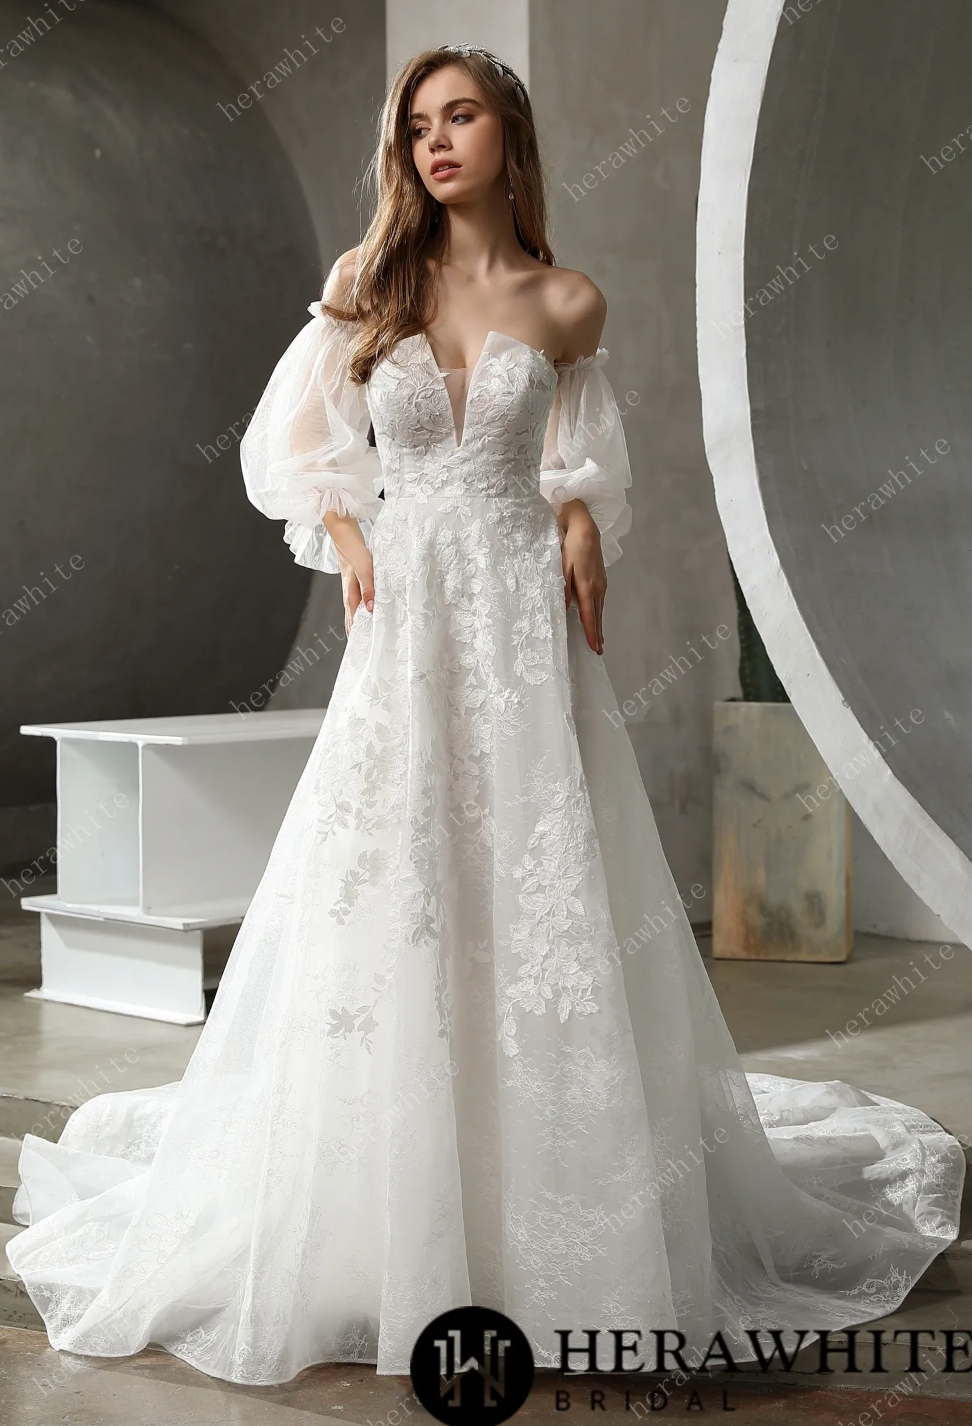 Sparkly Silver Gown, Silver Dress Silver Ballgown Wedding Gown, Modern  Evening Wear, Sparkly Ballgown, Custom Made 